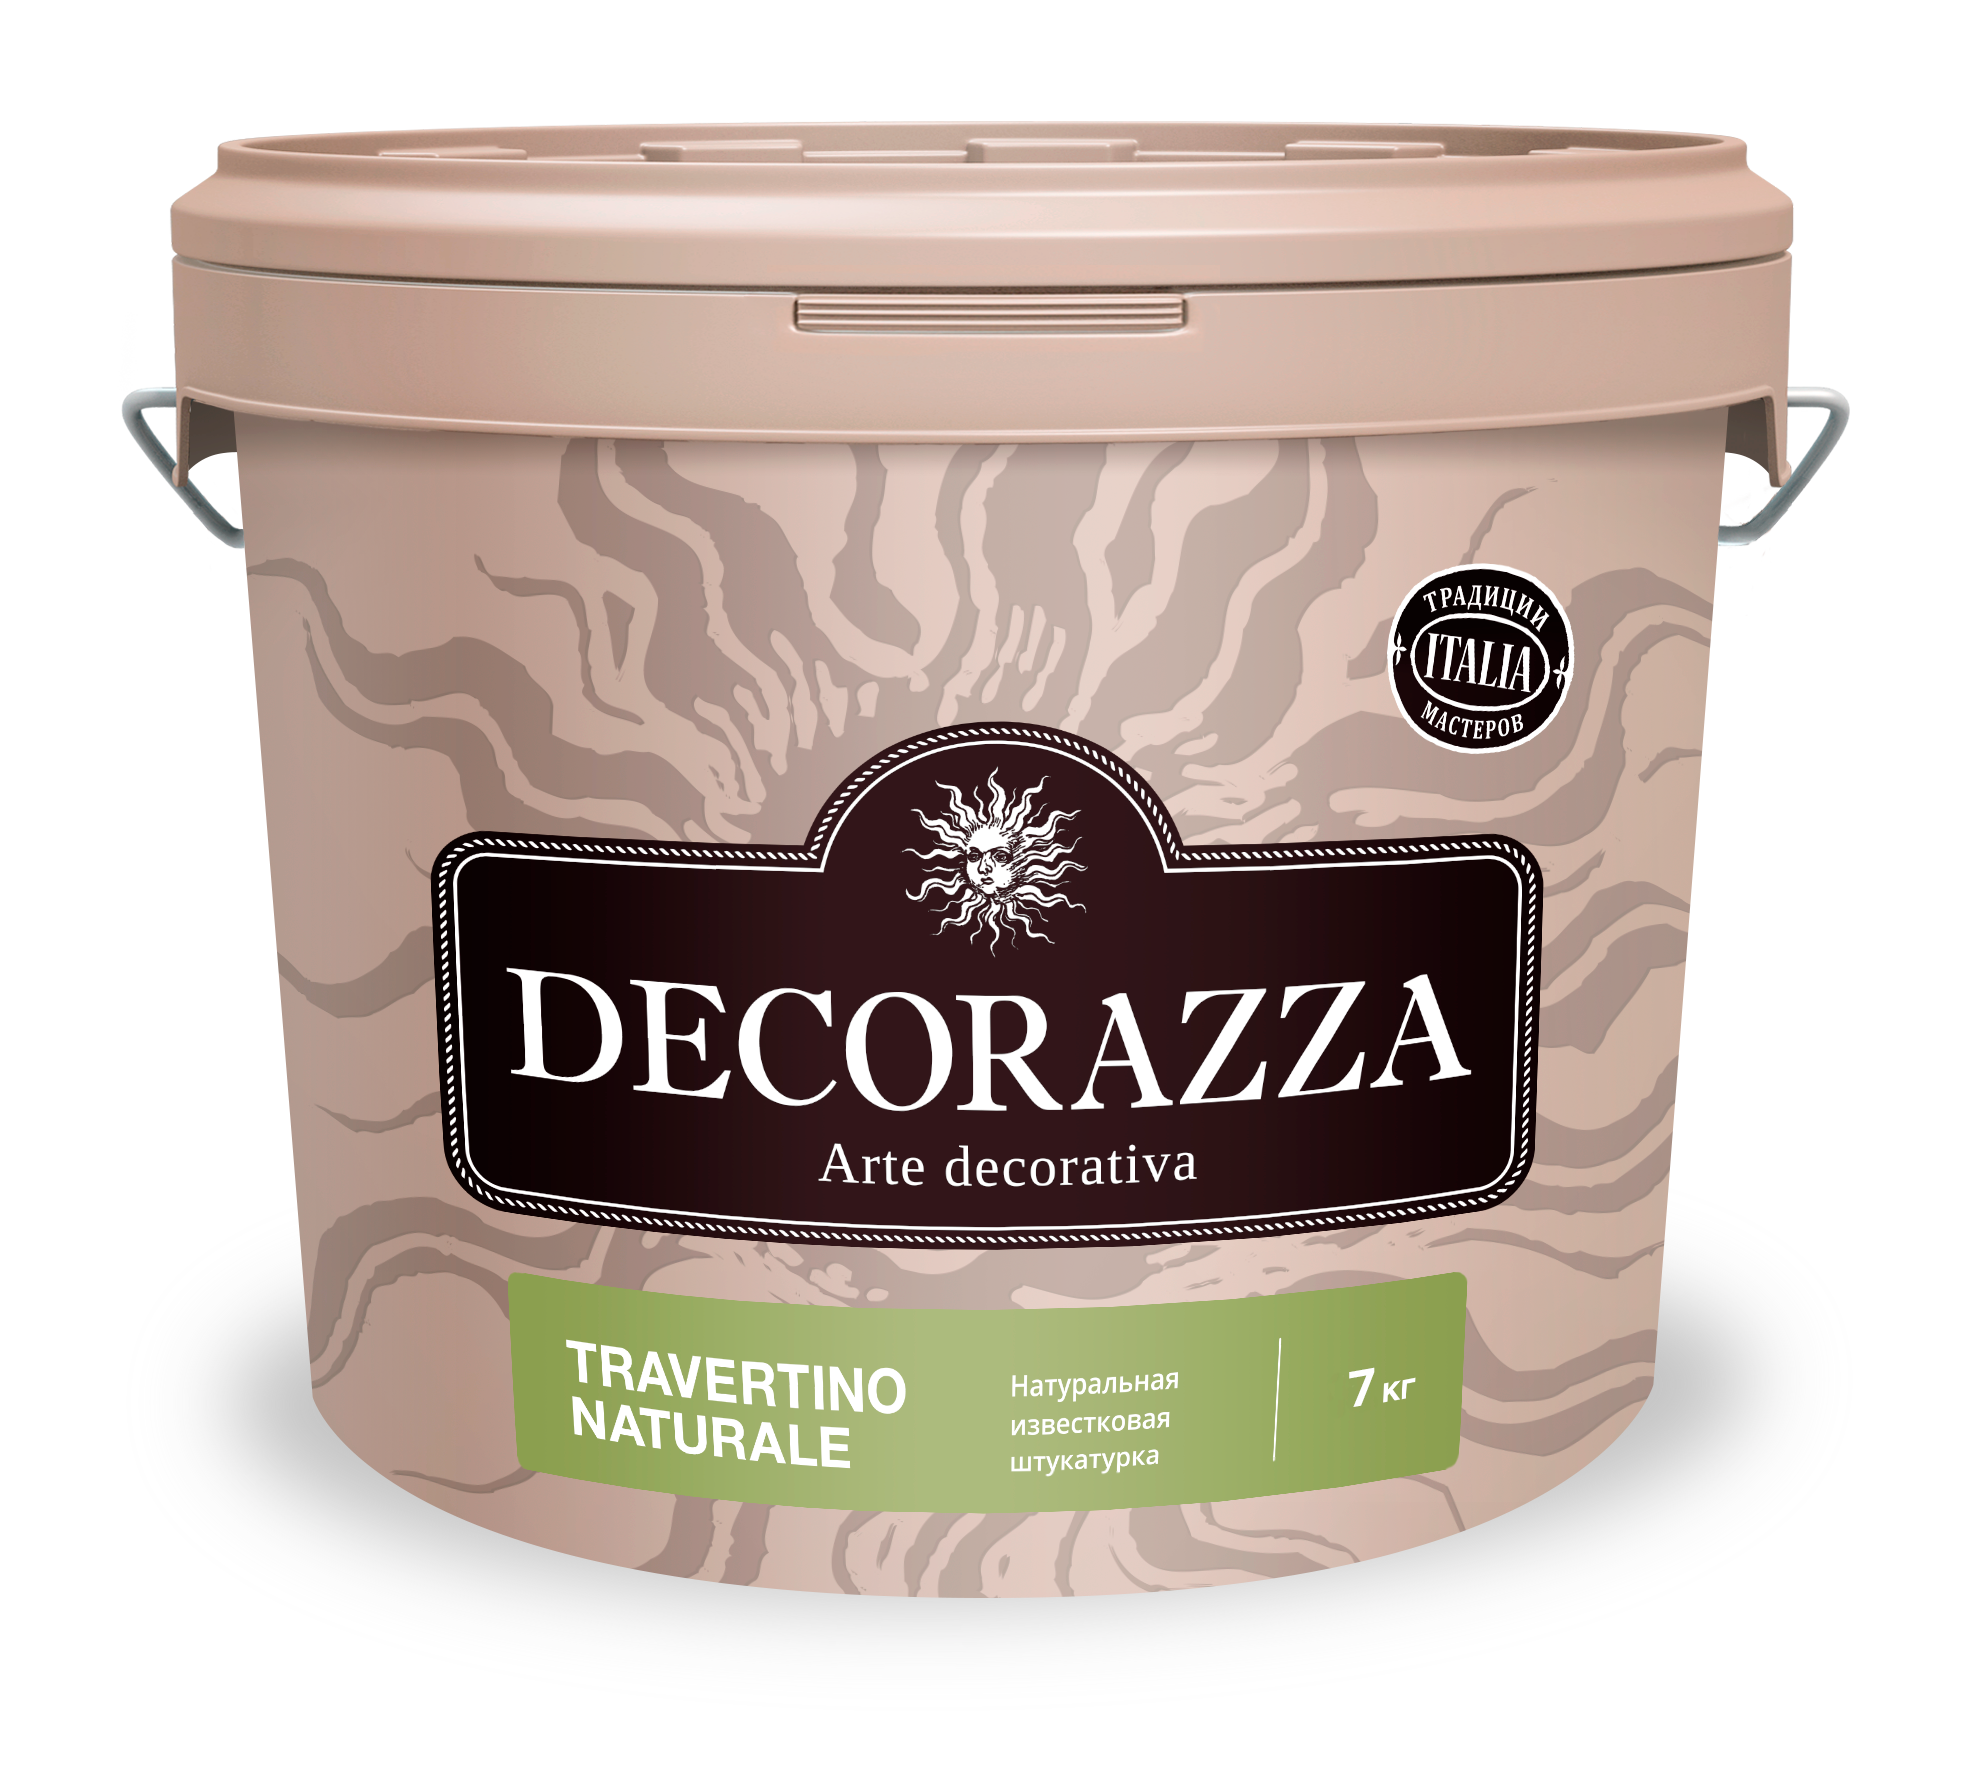 Декоративная штукатурка Decorazza Travertino naturale TRN 001, 7 кг